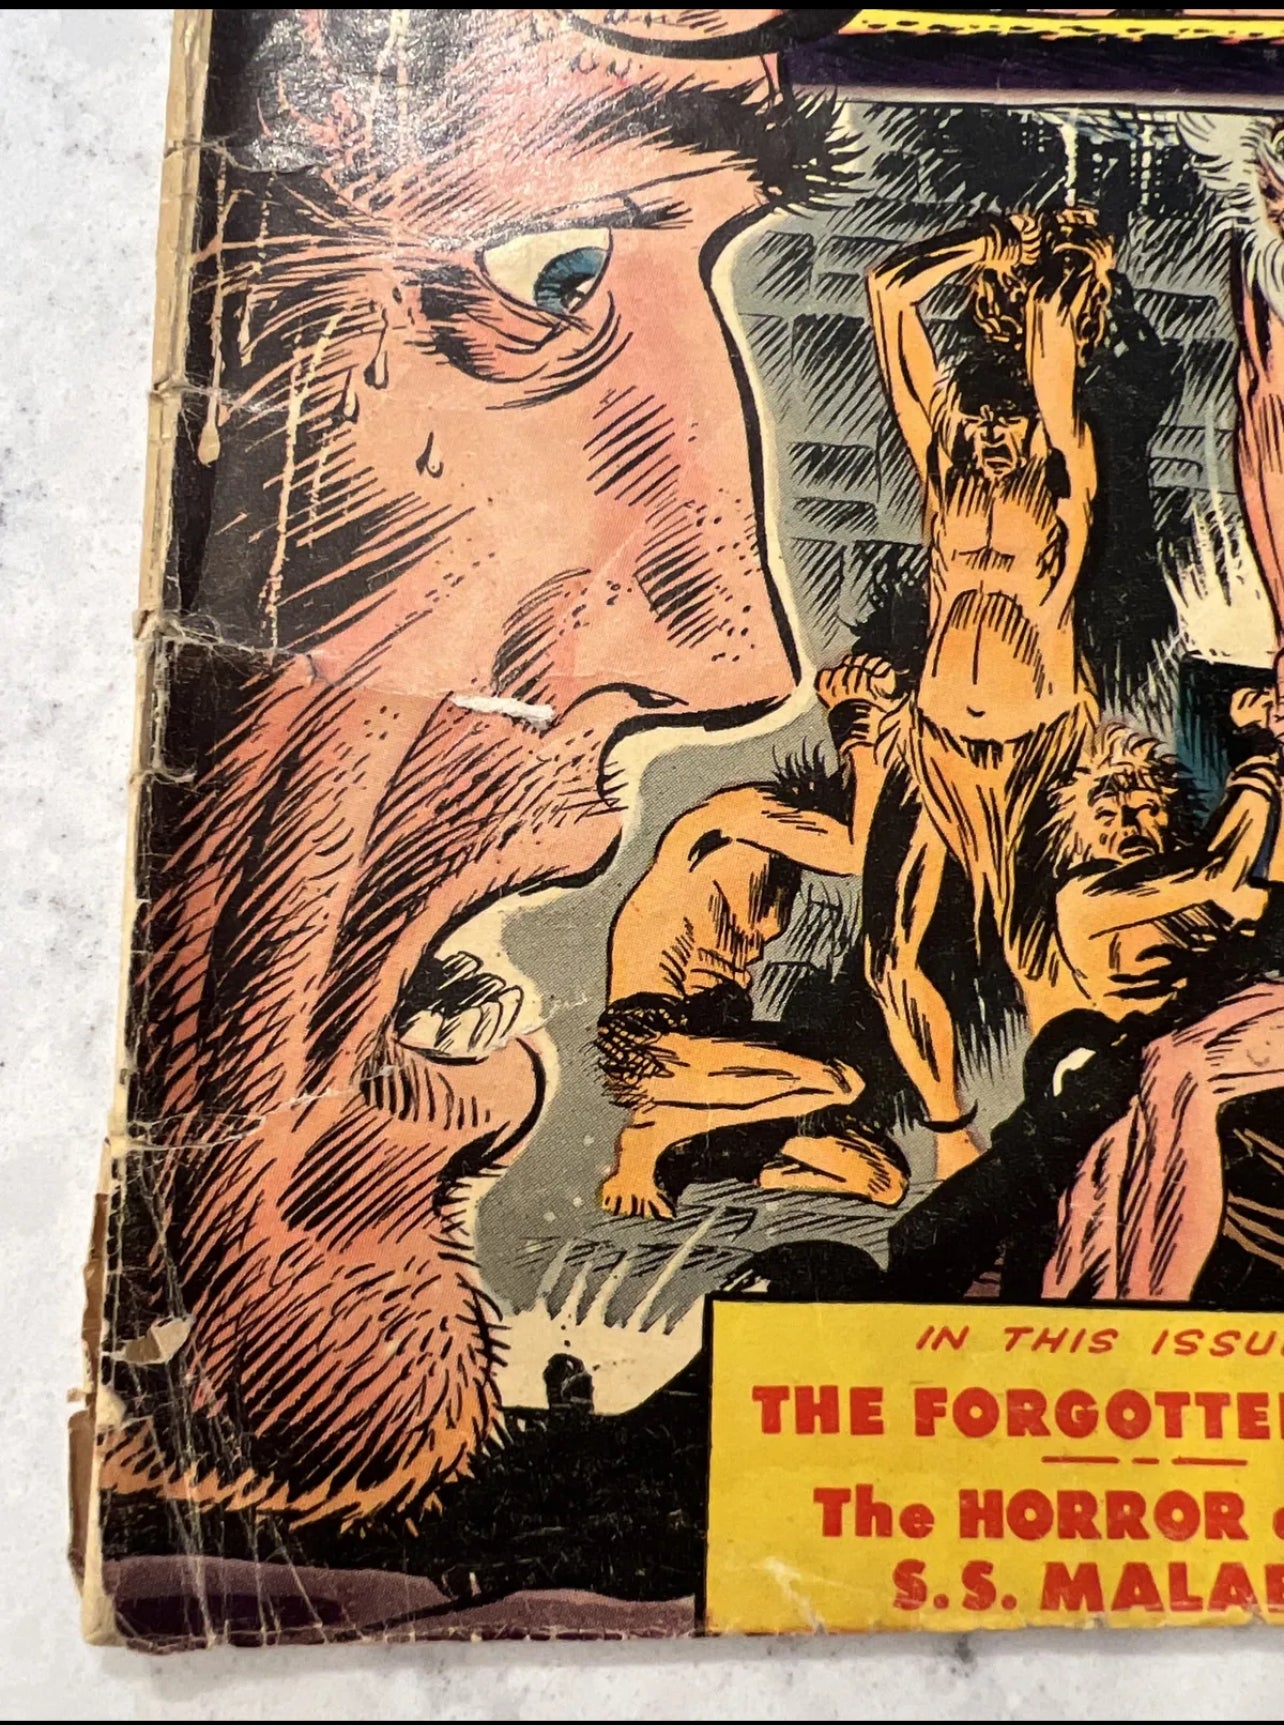 Nightmare #12 (St. John Publishing 1954, Joe Kubert Cover) Pre Code Horror